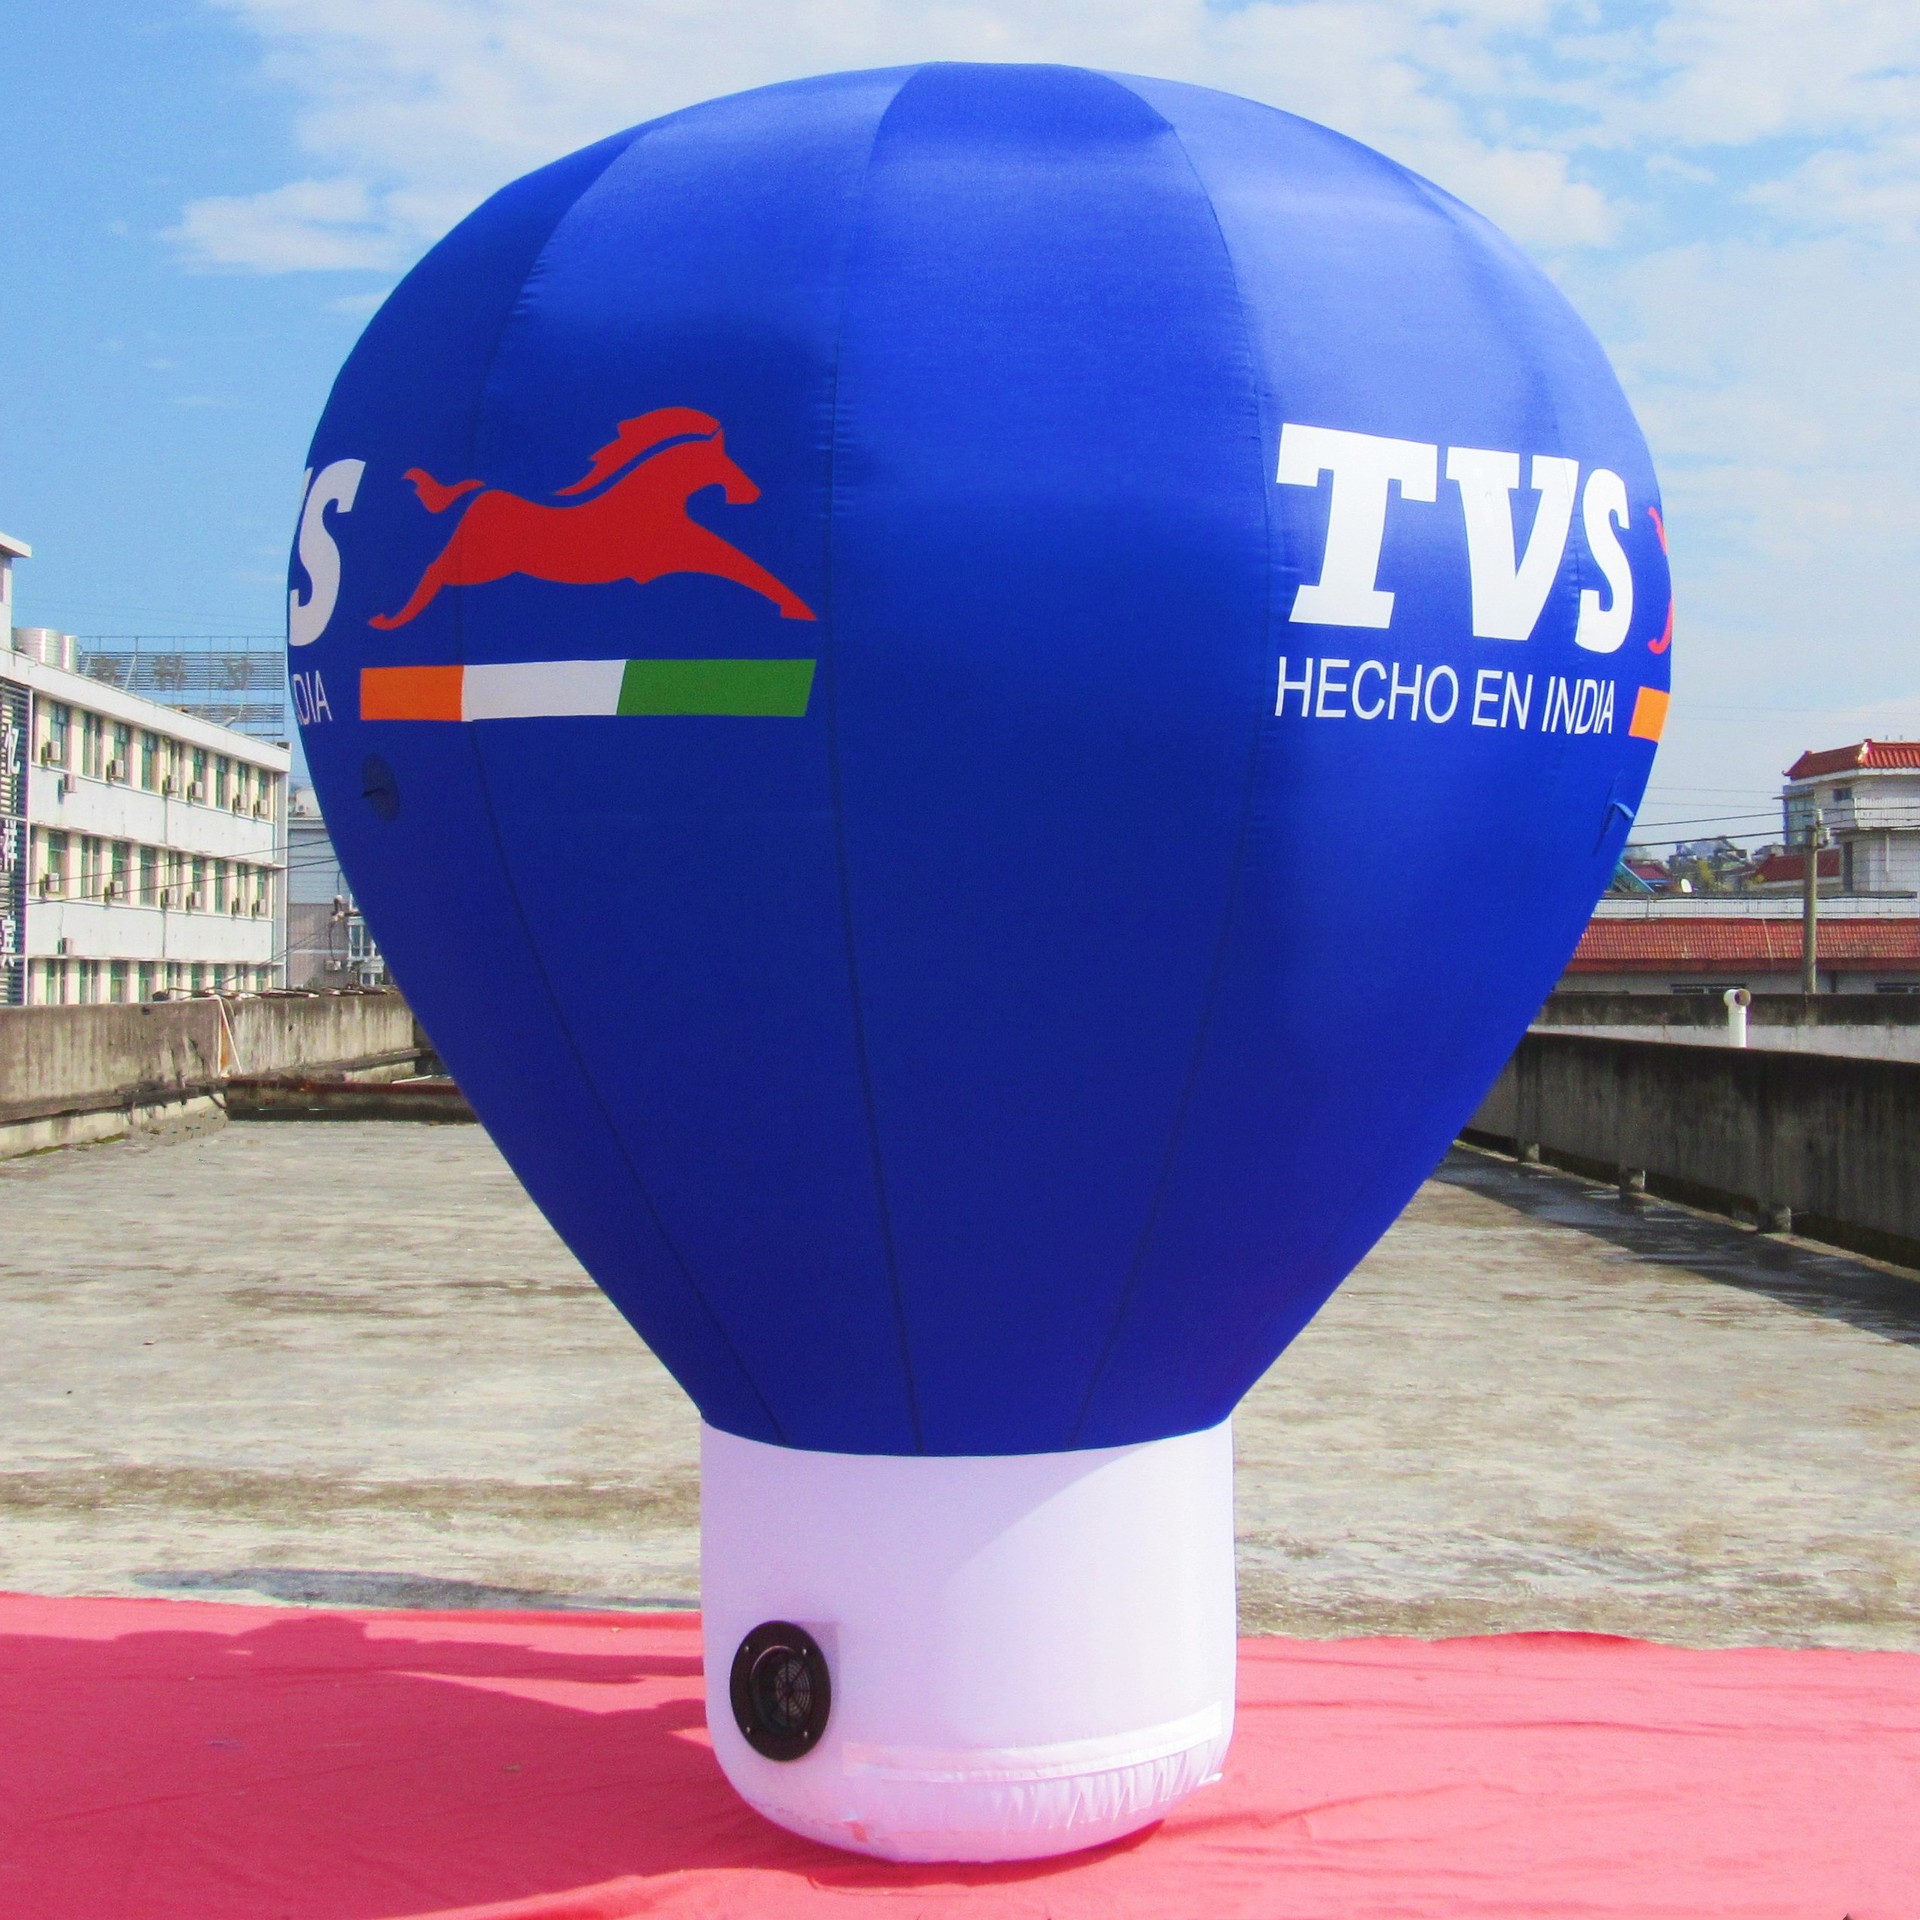 Inflatable Air balloon